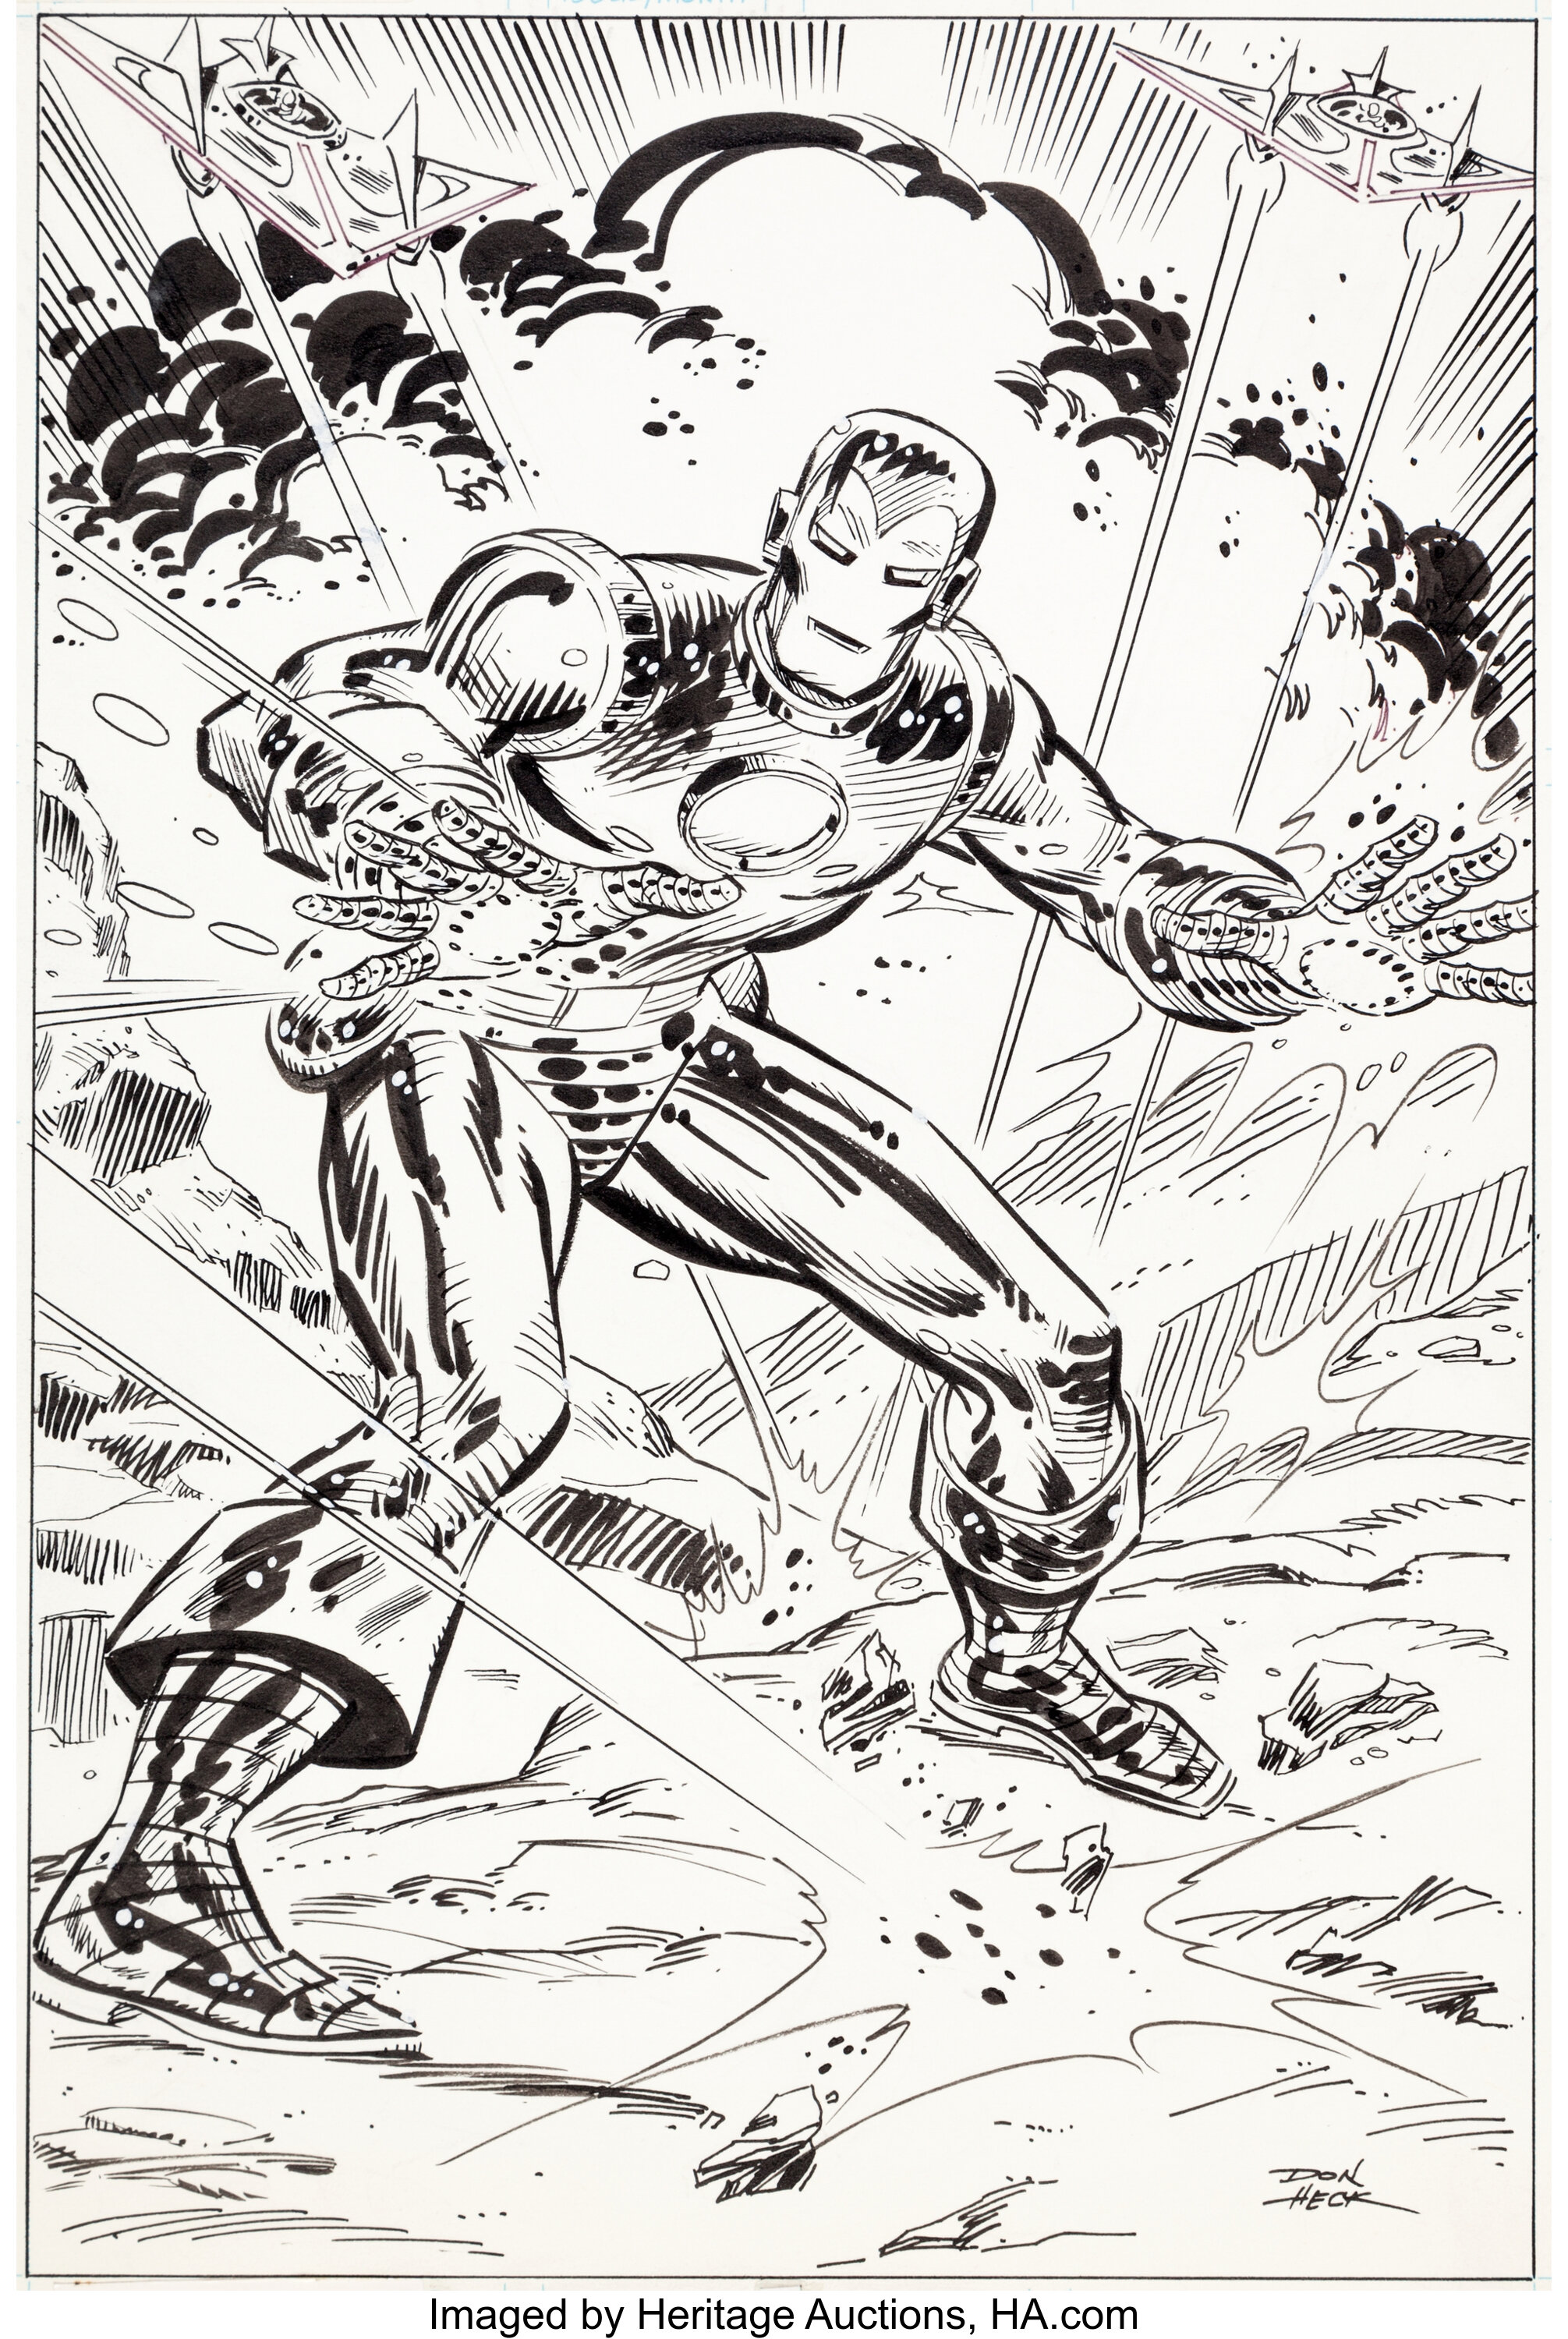 iron man comic art black and white